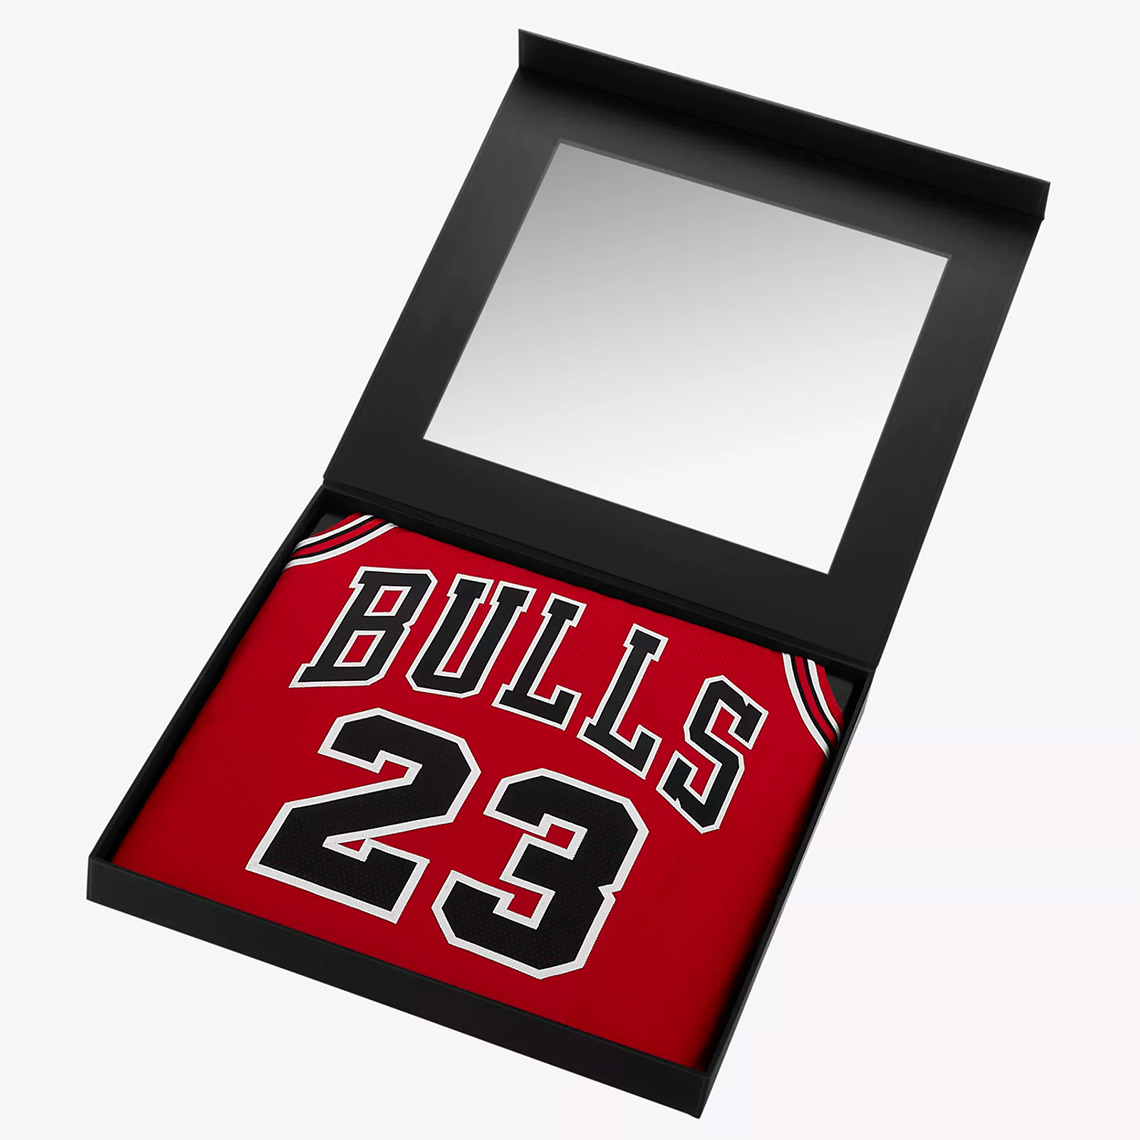 NikeConnect Michael Jordan Authentic Bulls Jersey Release Date